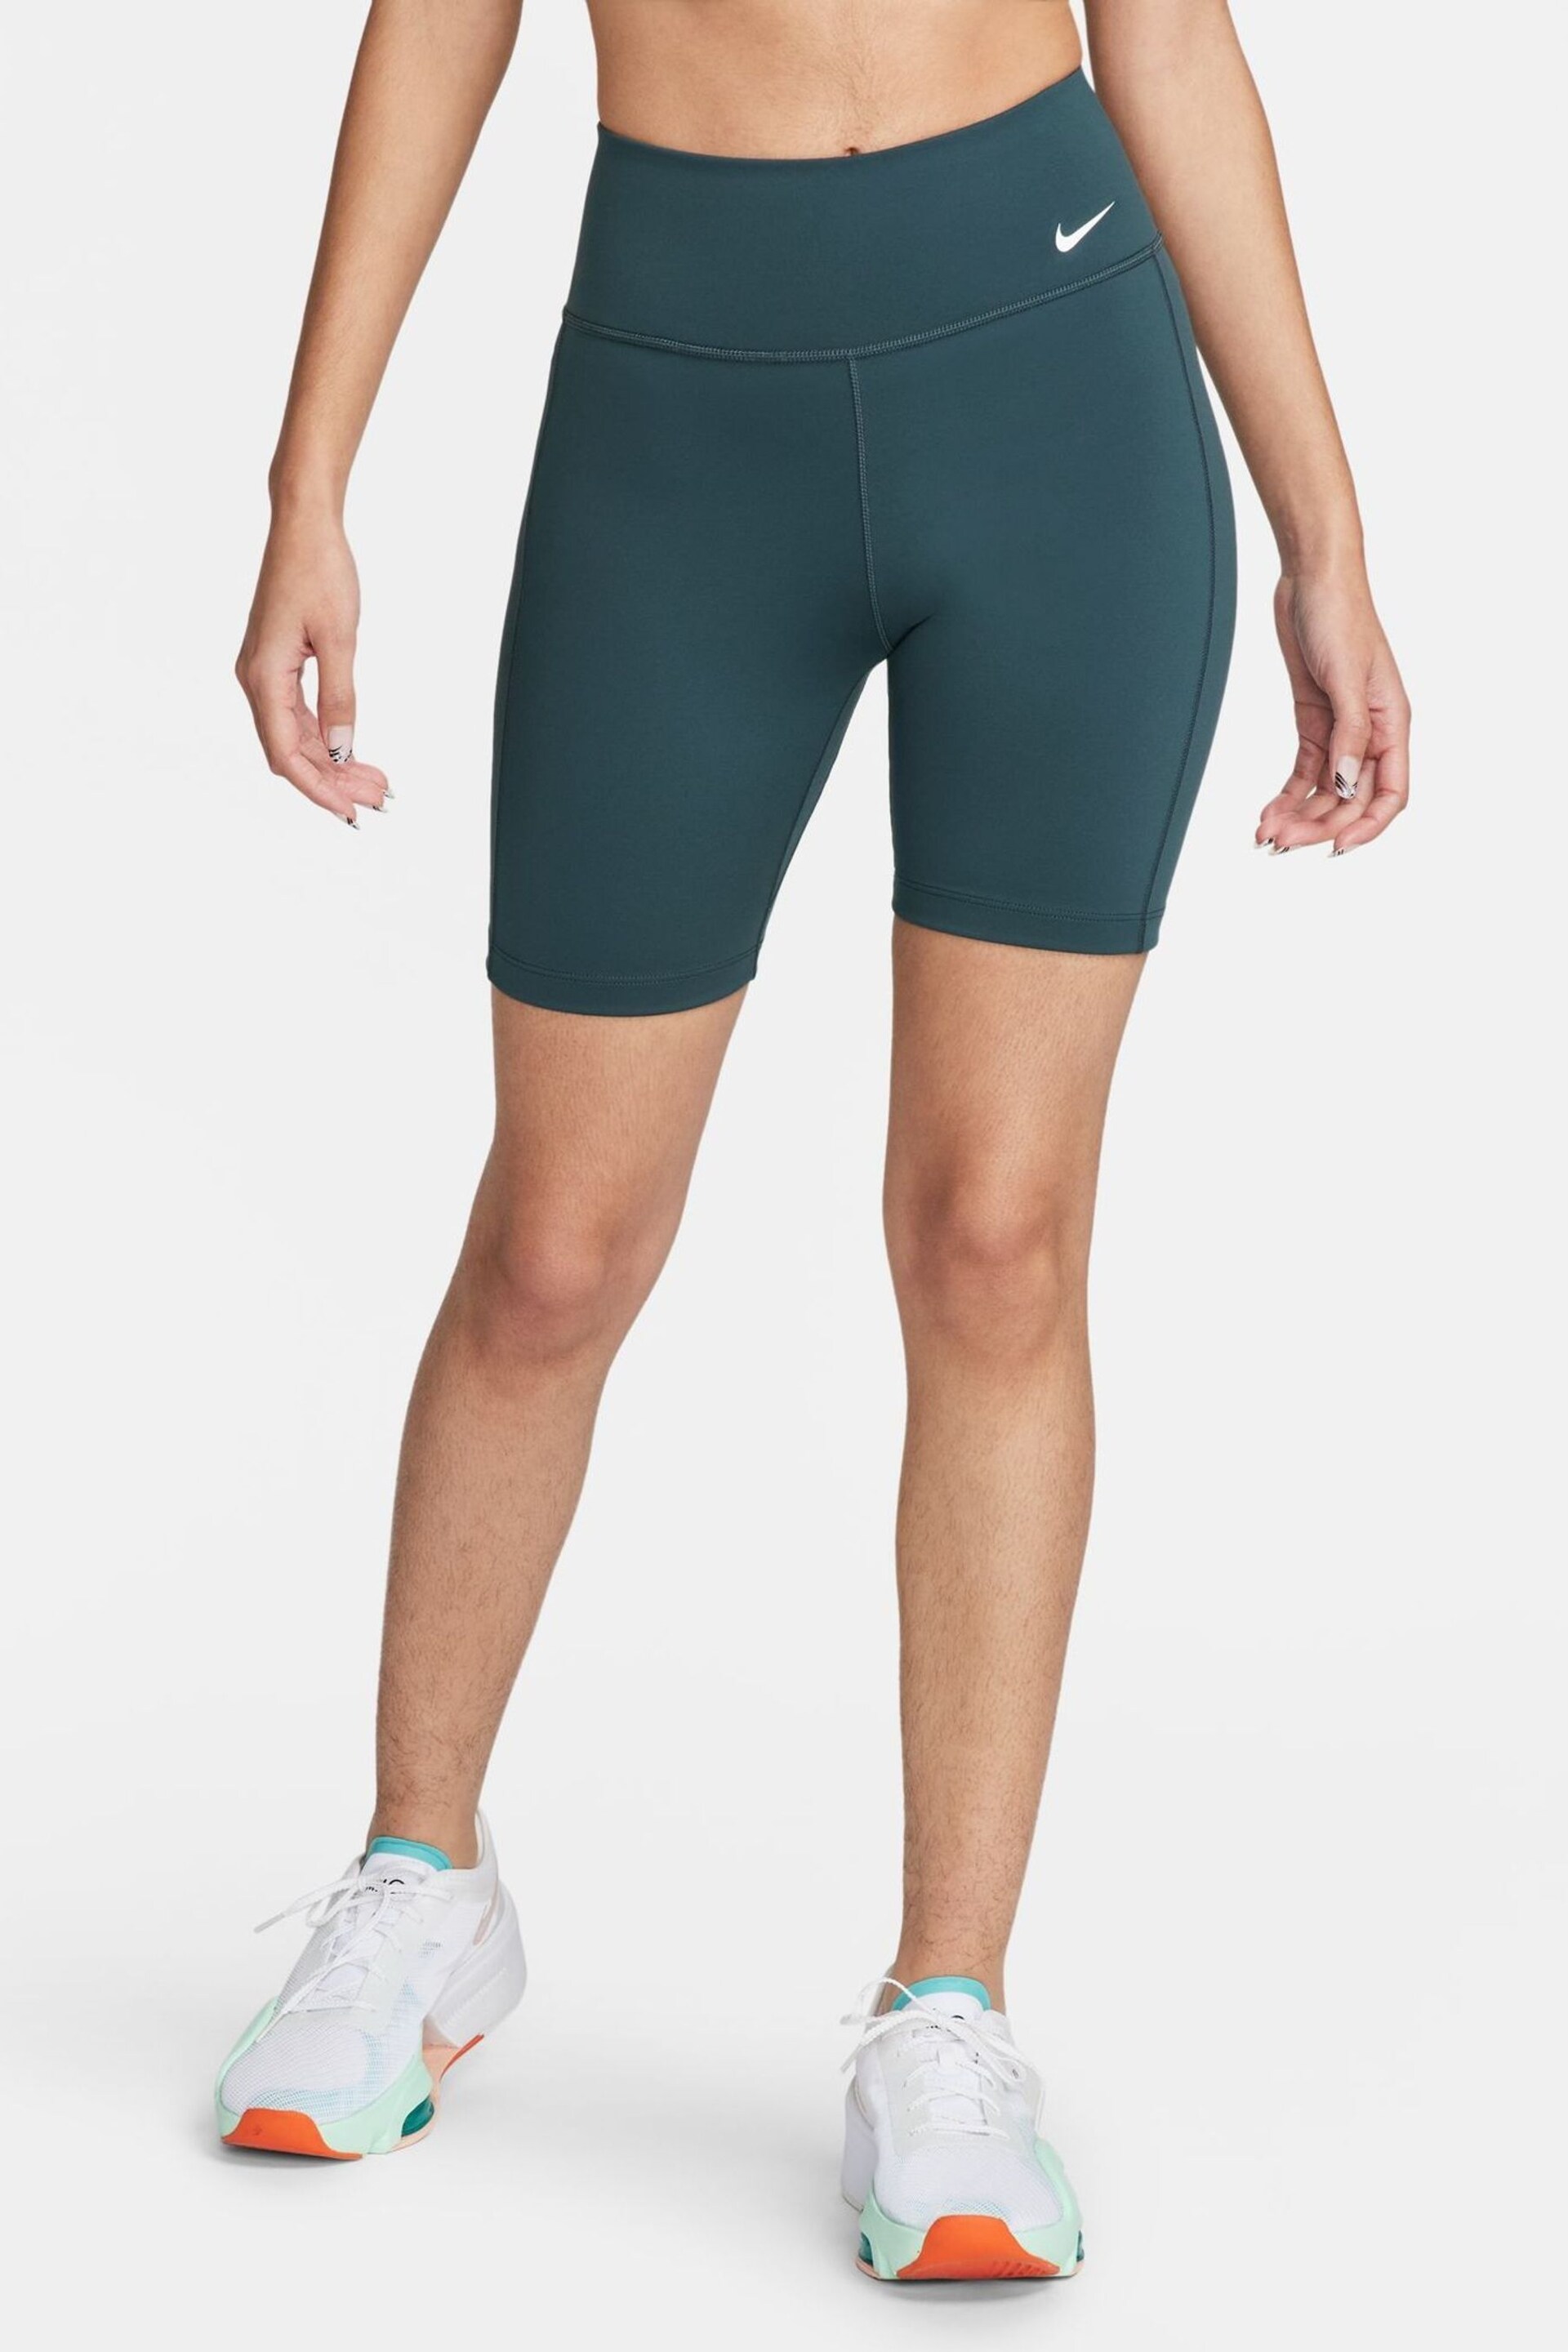 Nike Green Leak Protection Mid Rise 7 Biker Shorts - Image 2 of 8